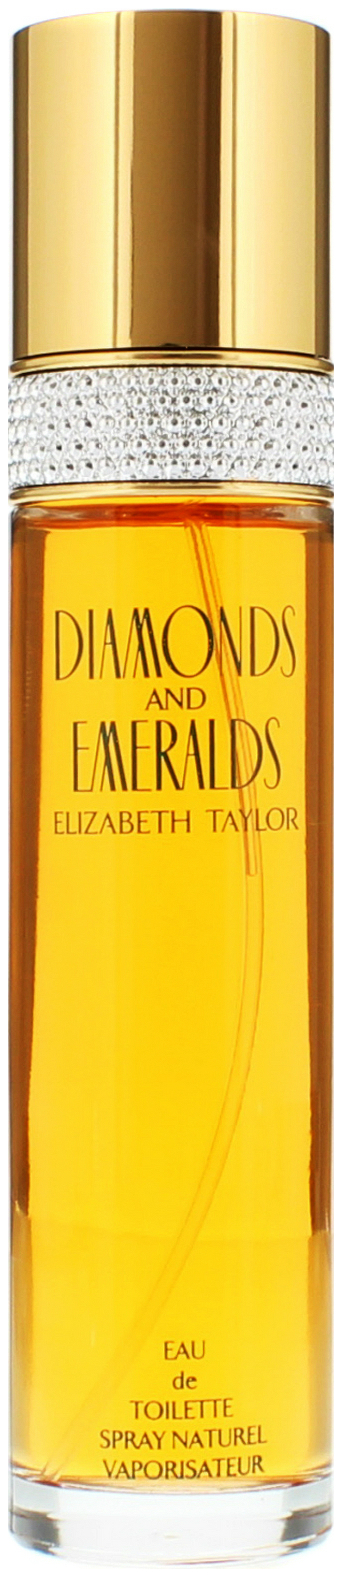 Туалетная вода Elizabeth Taylor Diamonds And Emeralds 100 мл converse chuck taylor all star lift egglet с цветочной вышивкой a03516c